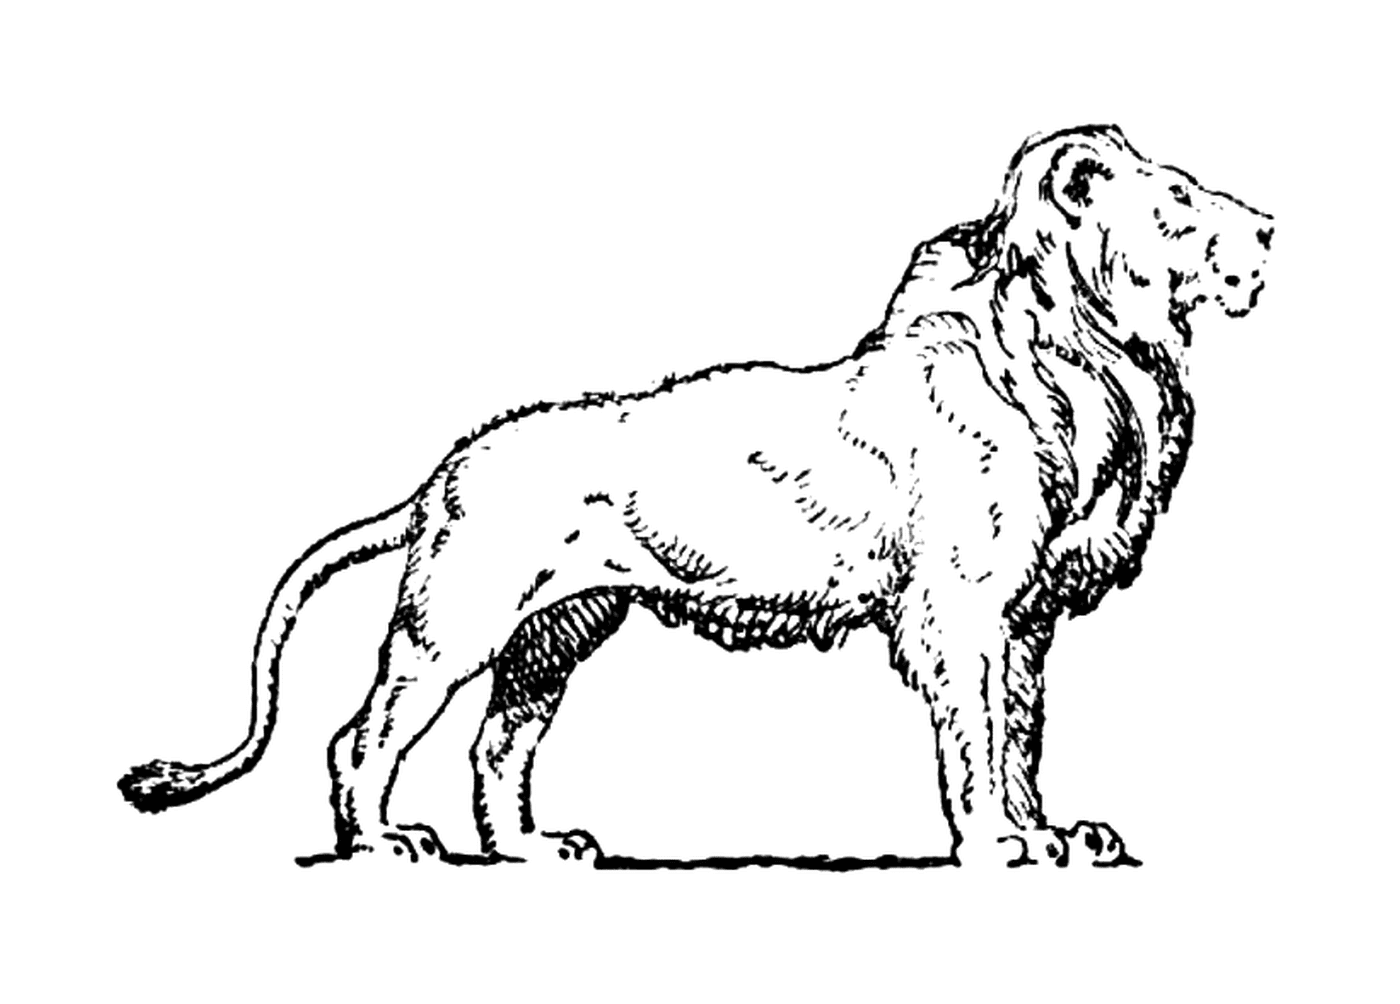  Leão da África Oriental, sportsman 